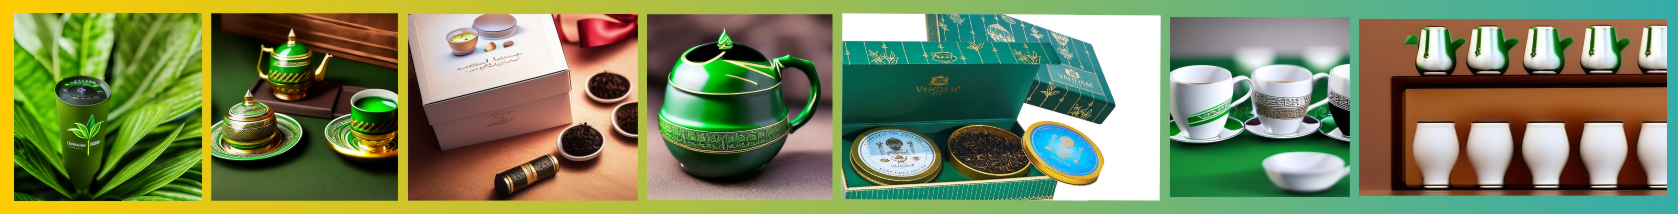 Gift Ideas for Saudi National Day tea